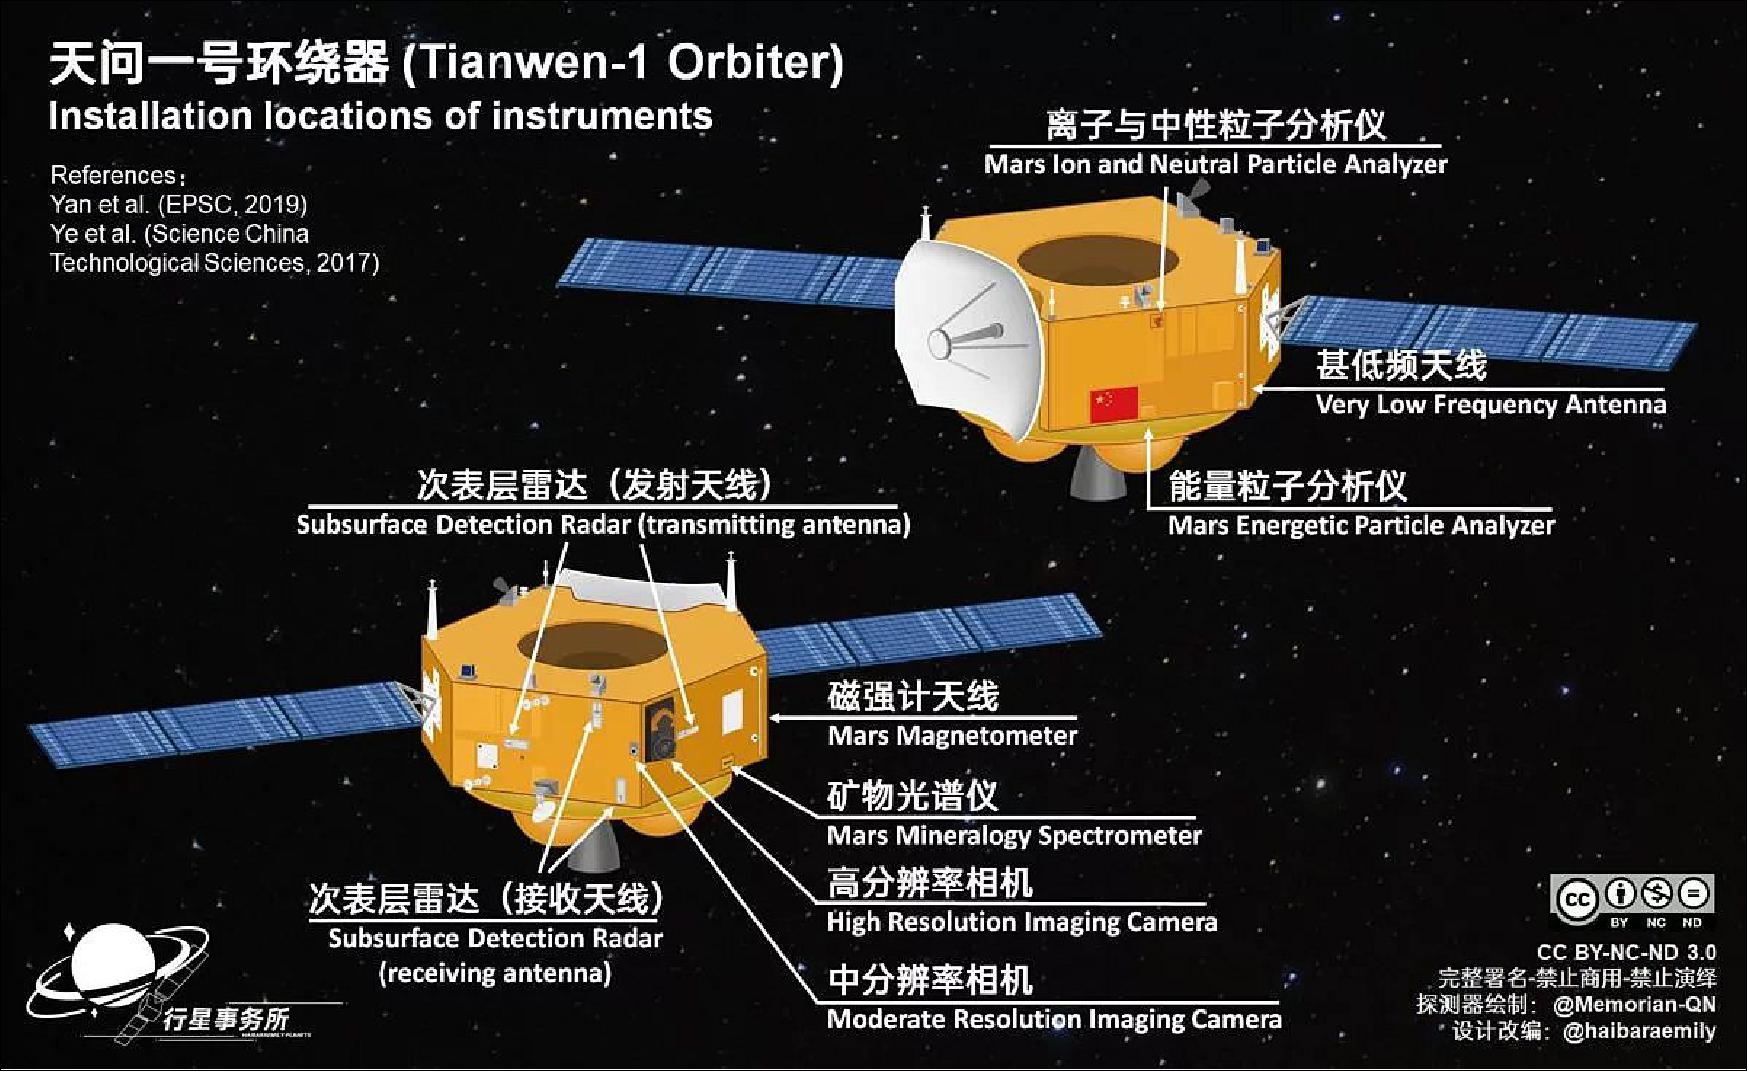 Tianwen-1 Orbiter Instruments